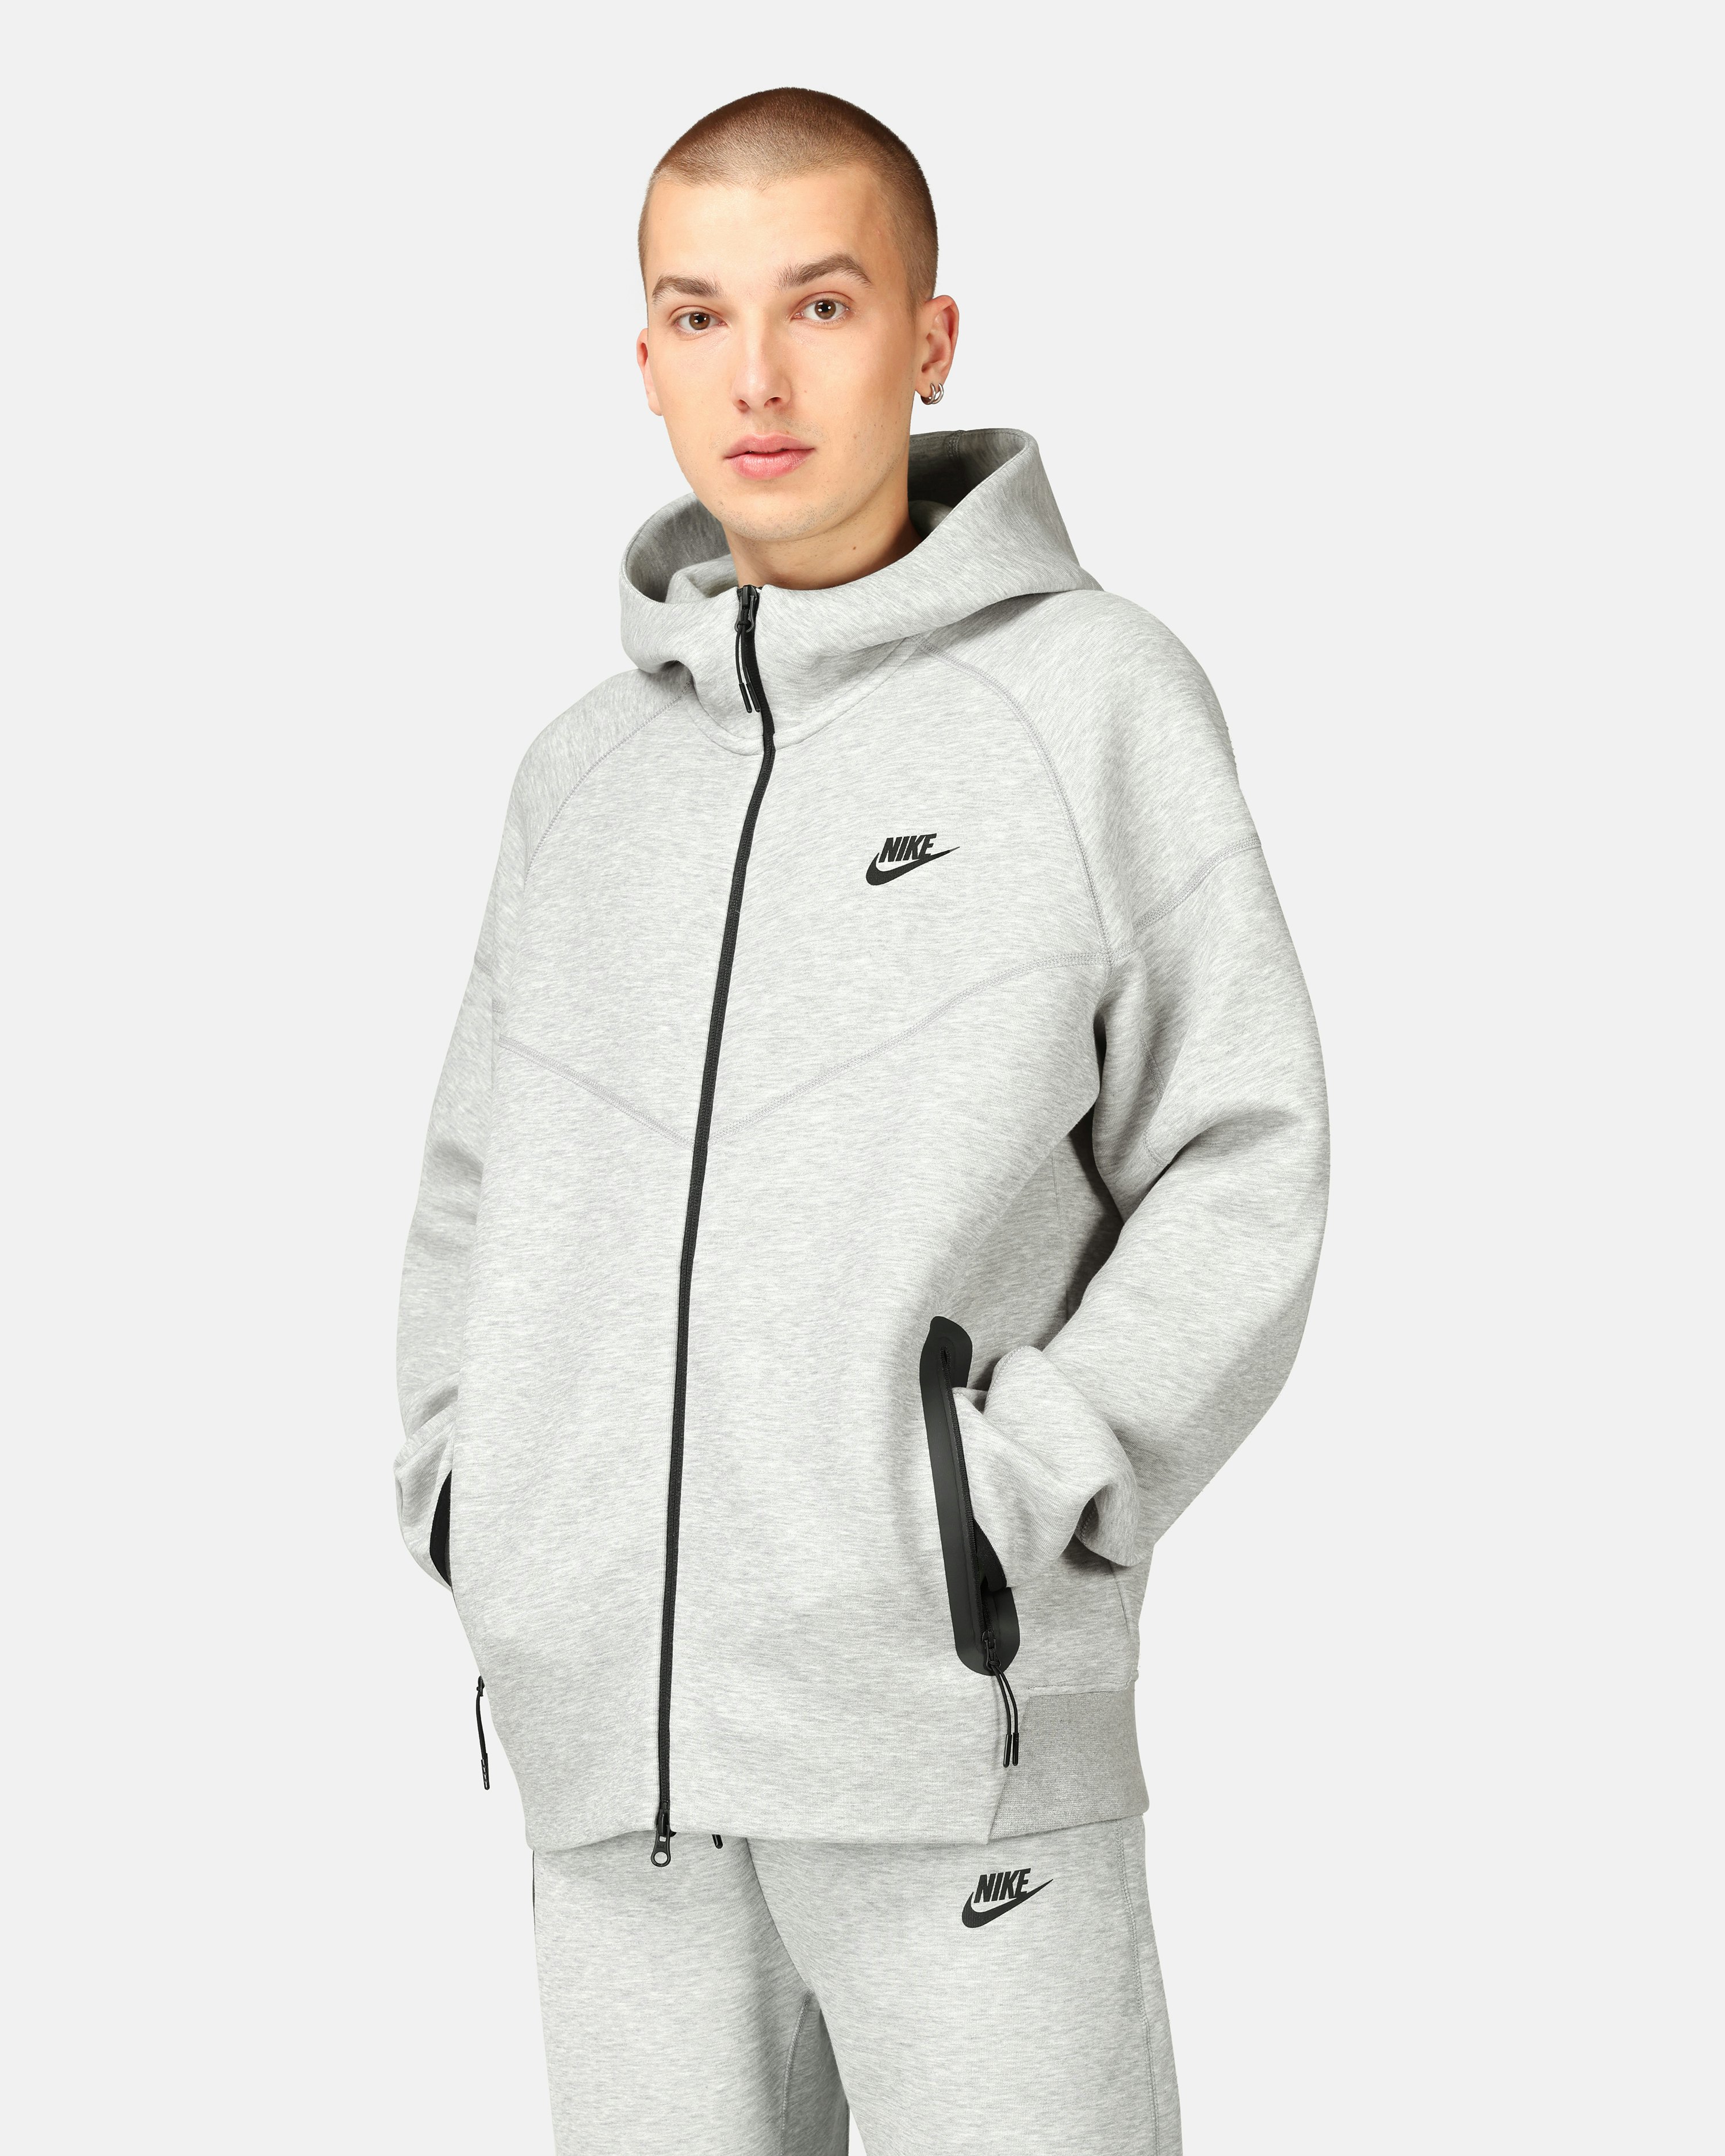 Nike Tech Fleece Jacket Light grey, Unisex